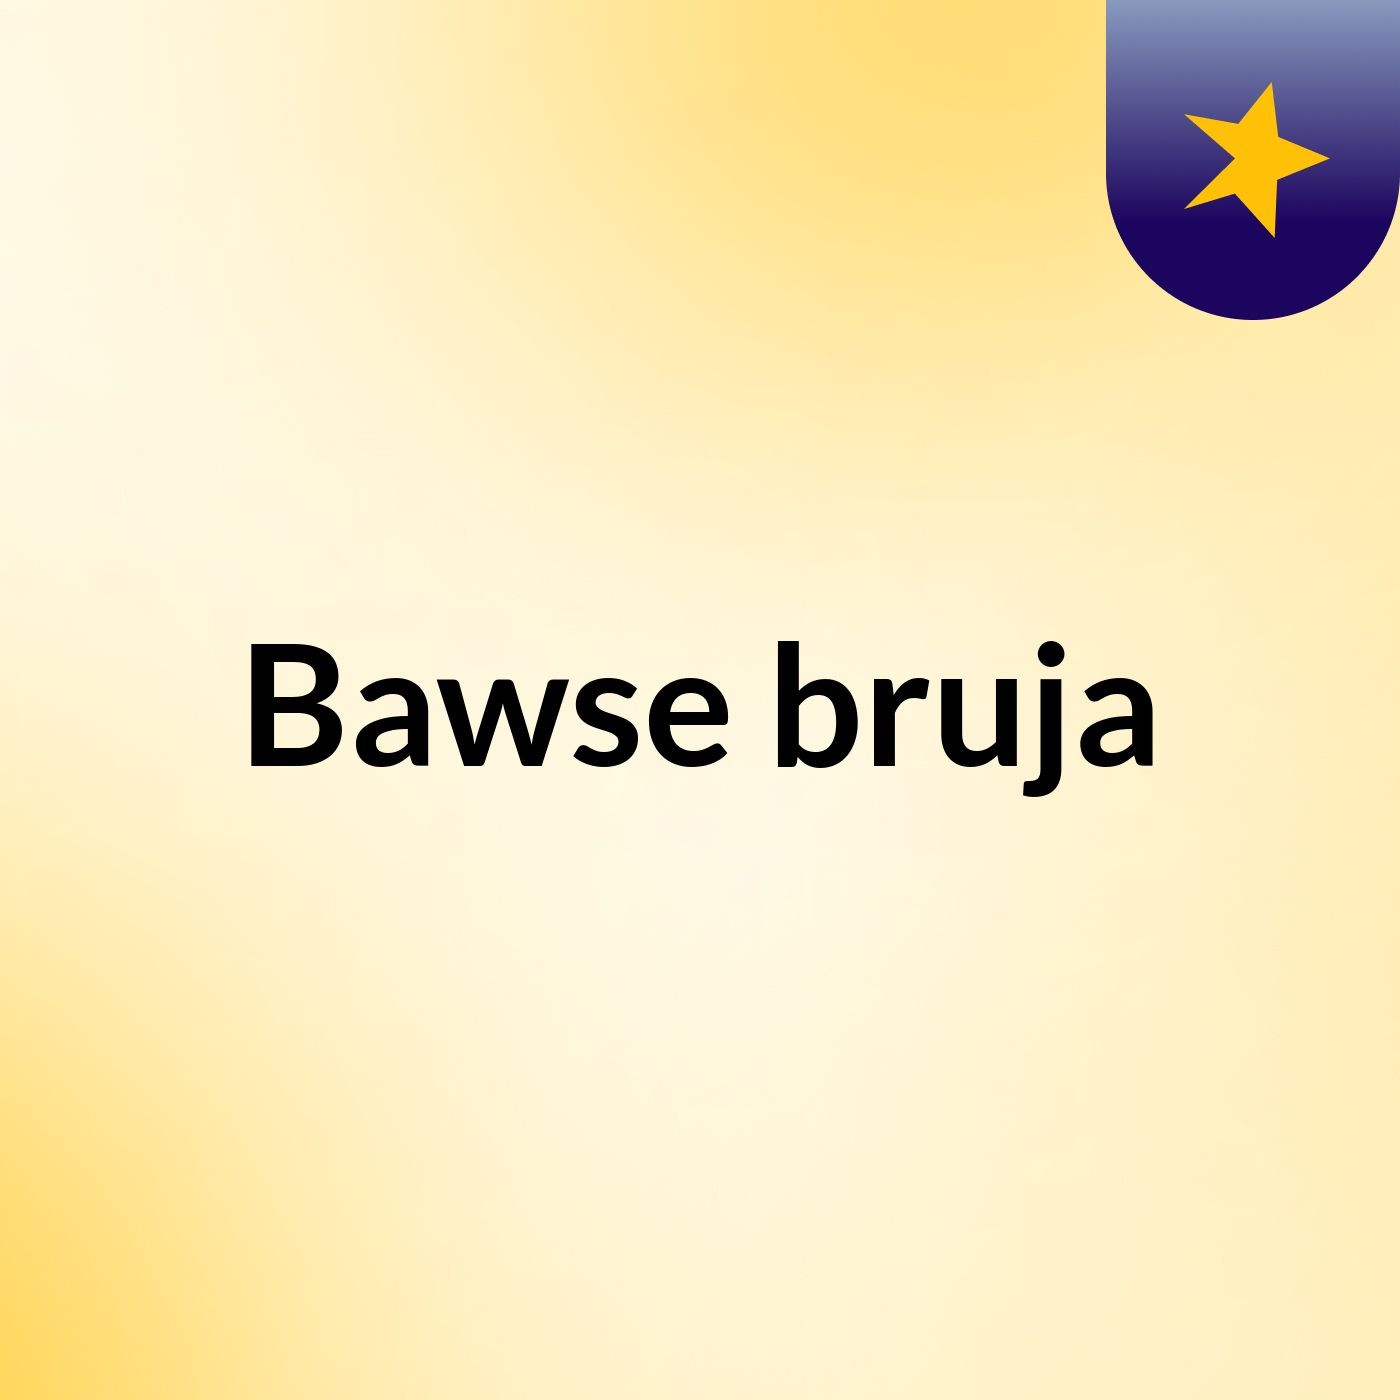 Bawse bruja